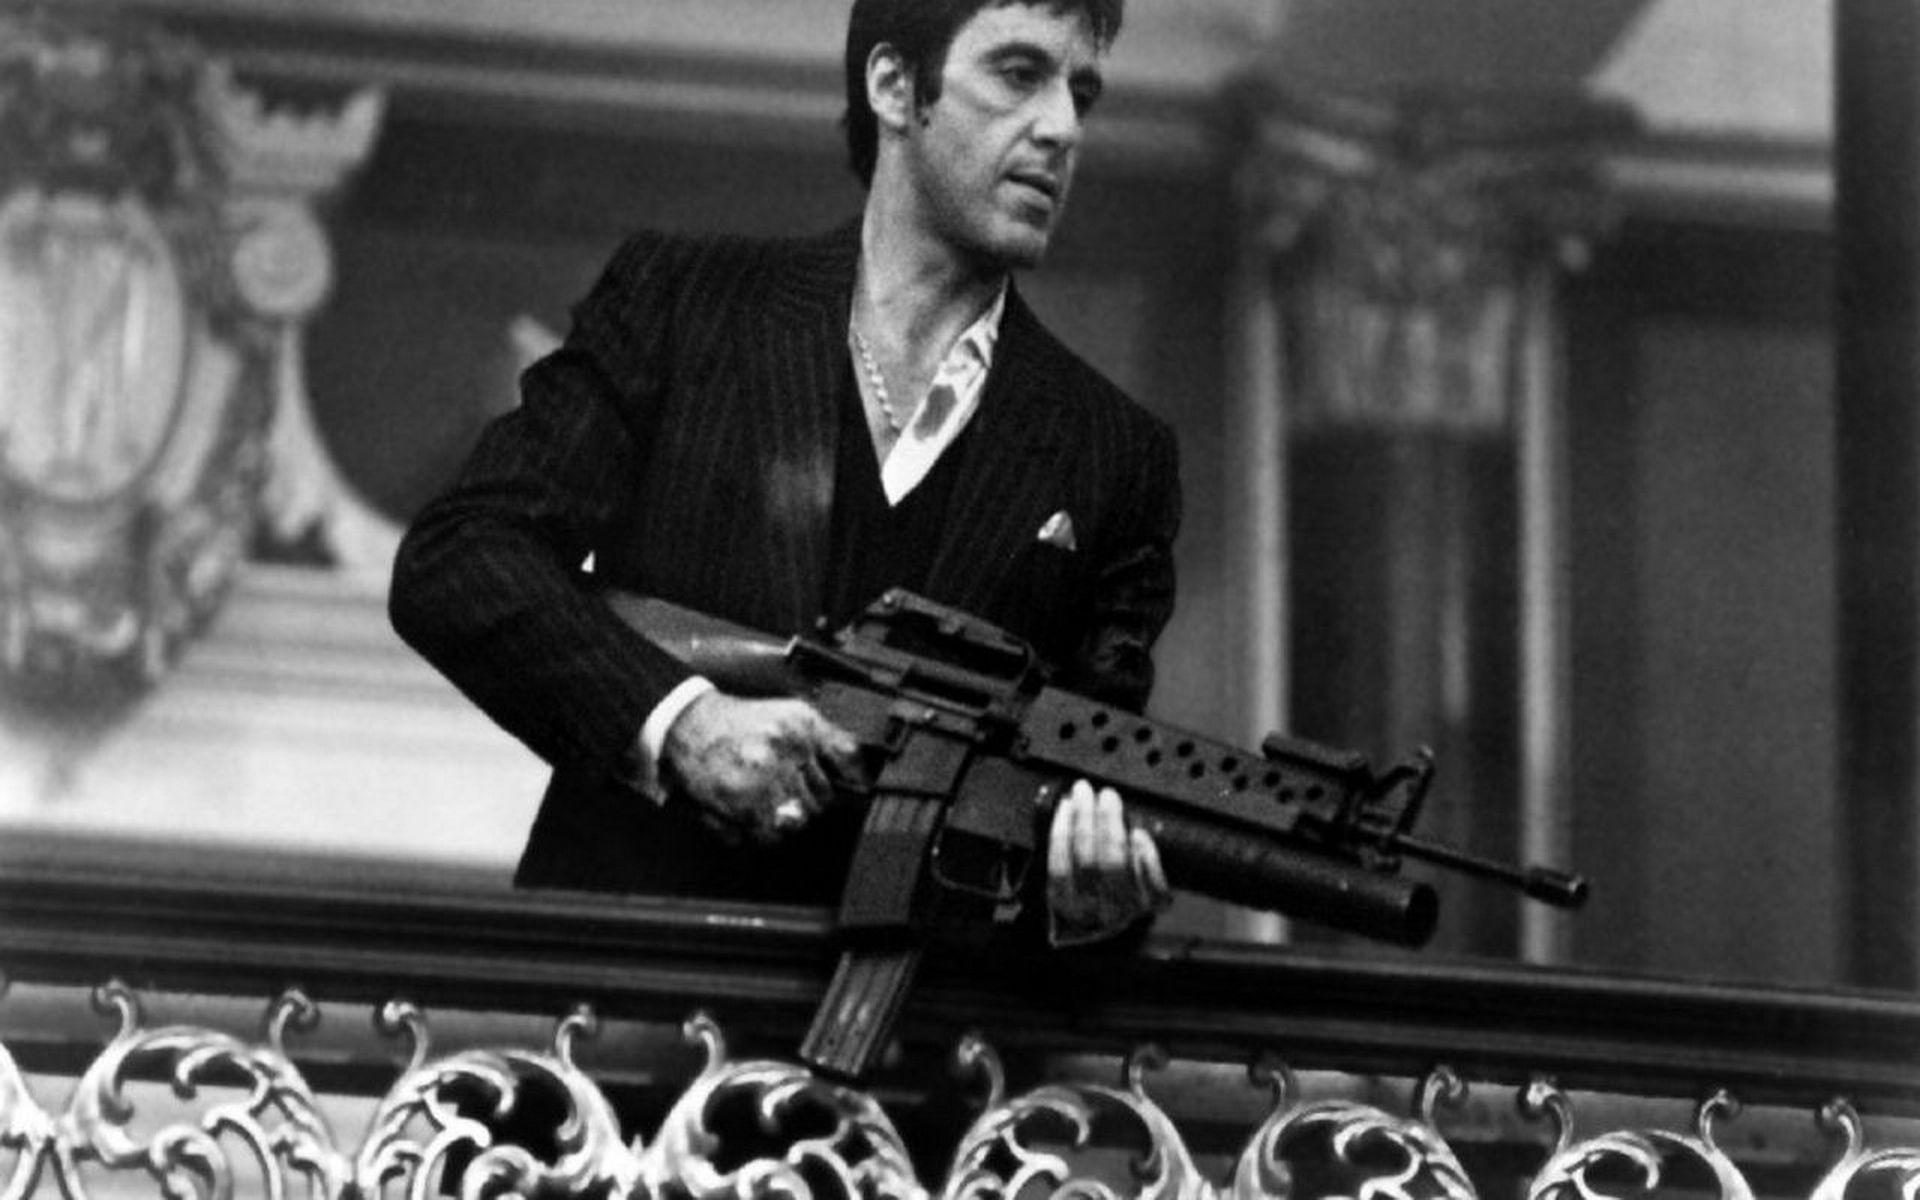 Image for Desktop: Al Pacino Scarface